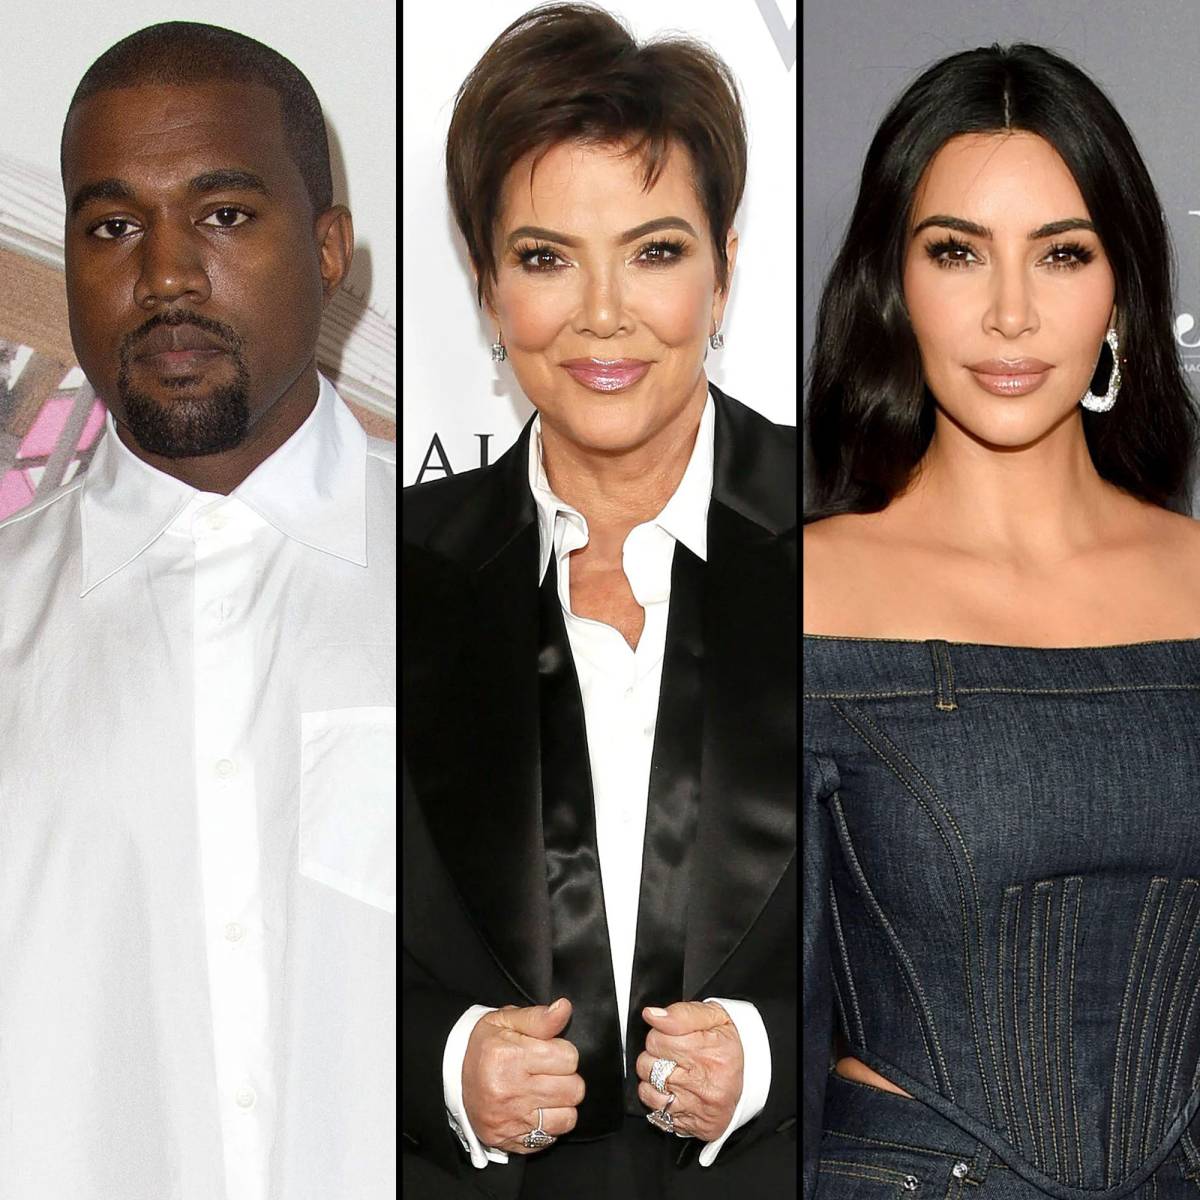 Schoolgerl Hdsexvidiyo - Kanye West Calls Out Kris Jenner, Claims Porn 'Destroyed' Family